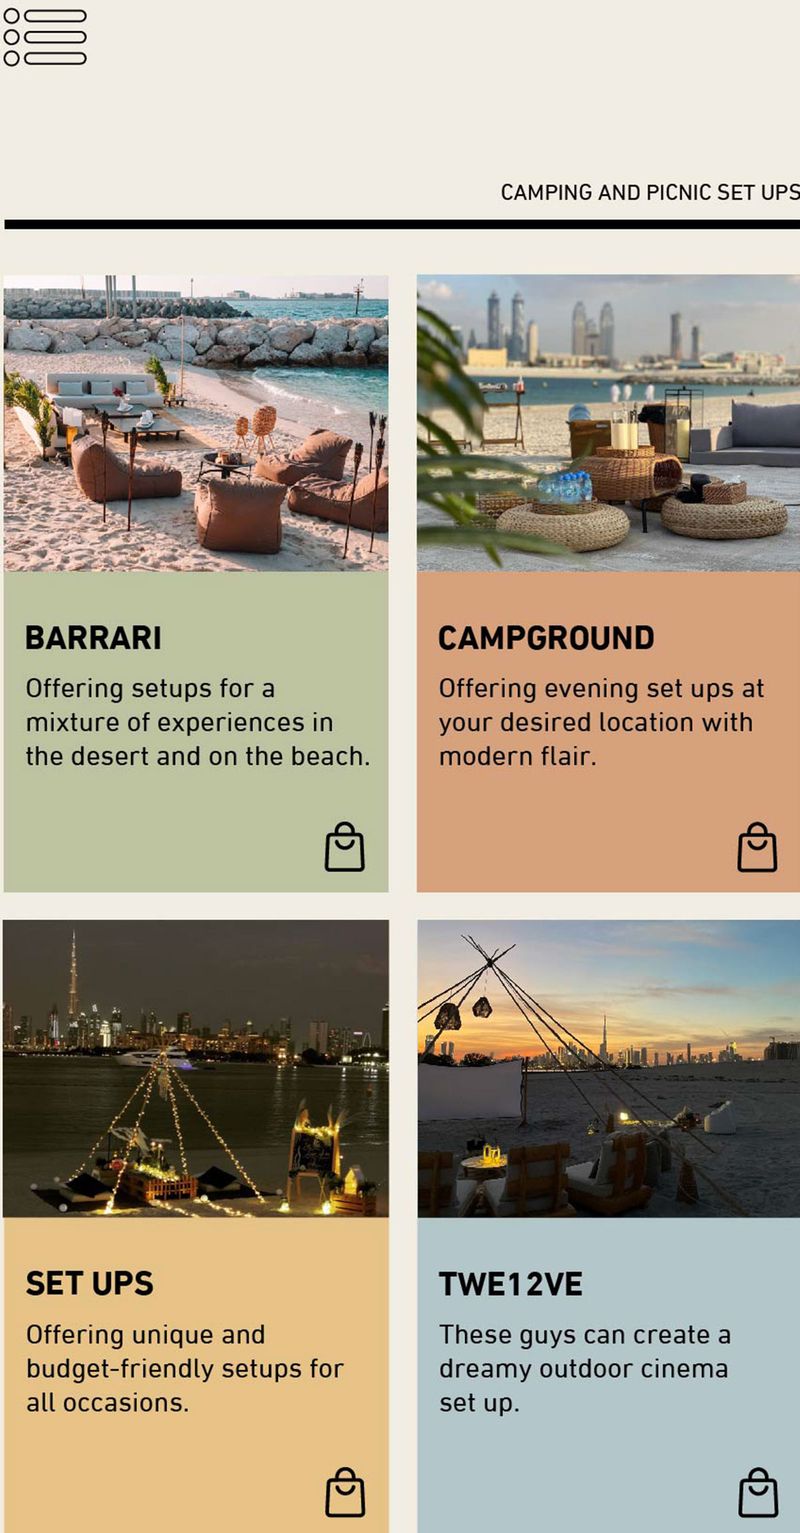 Dubai picnic and camping guide